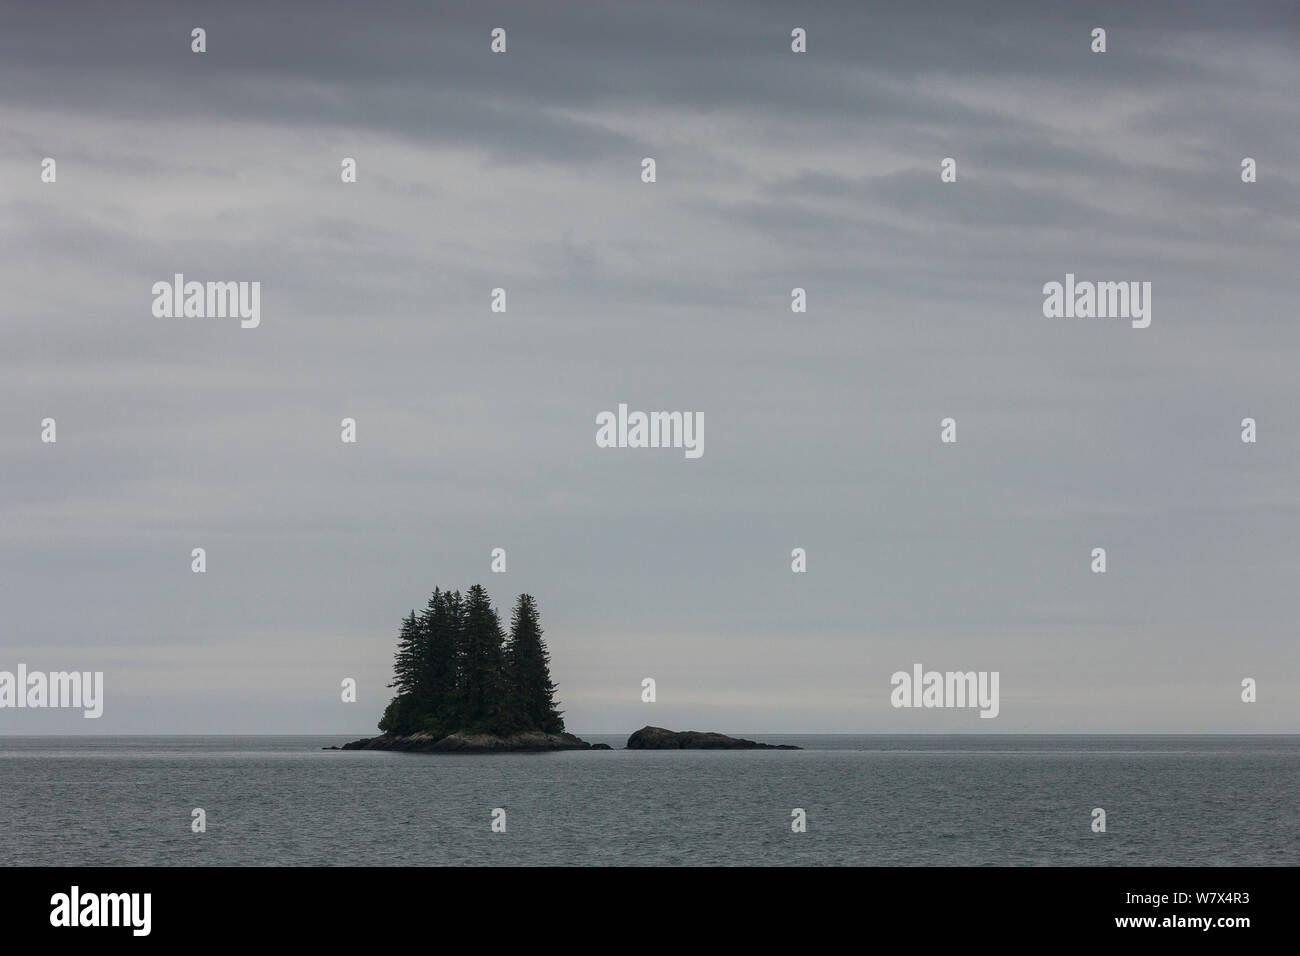 Small Island with Spruce trees (Picea), Prince William Sound, Alaska, USA. June 2013. Stock Photo